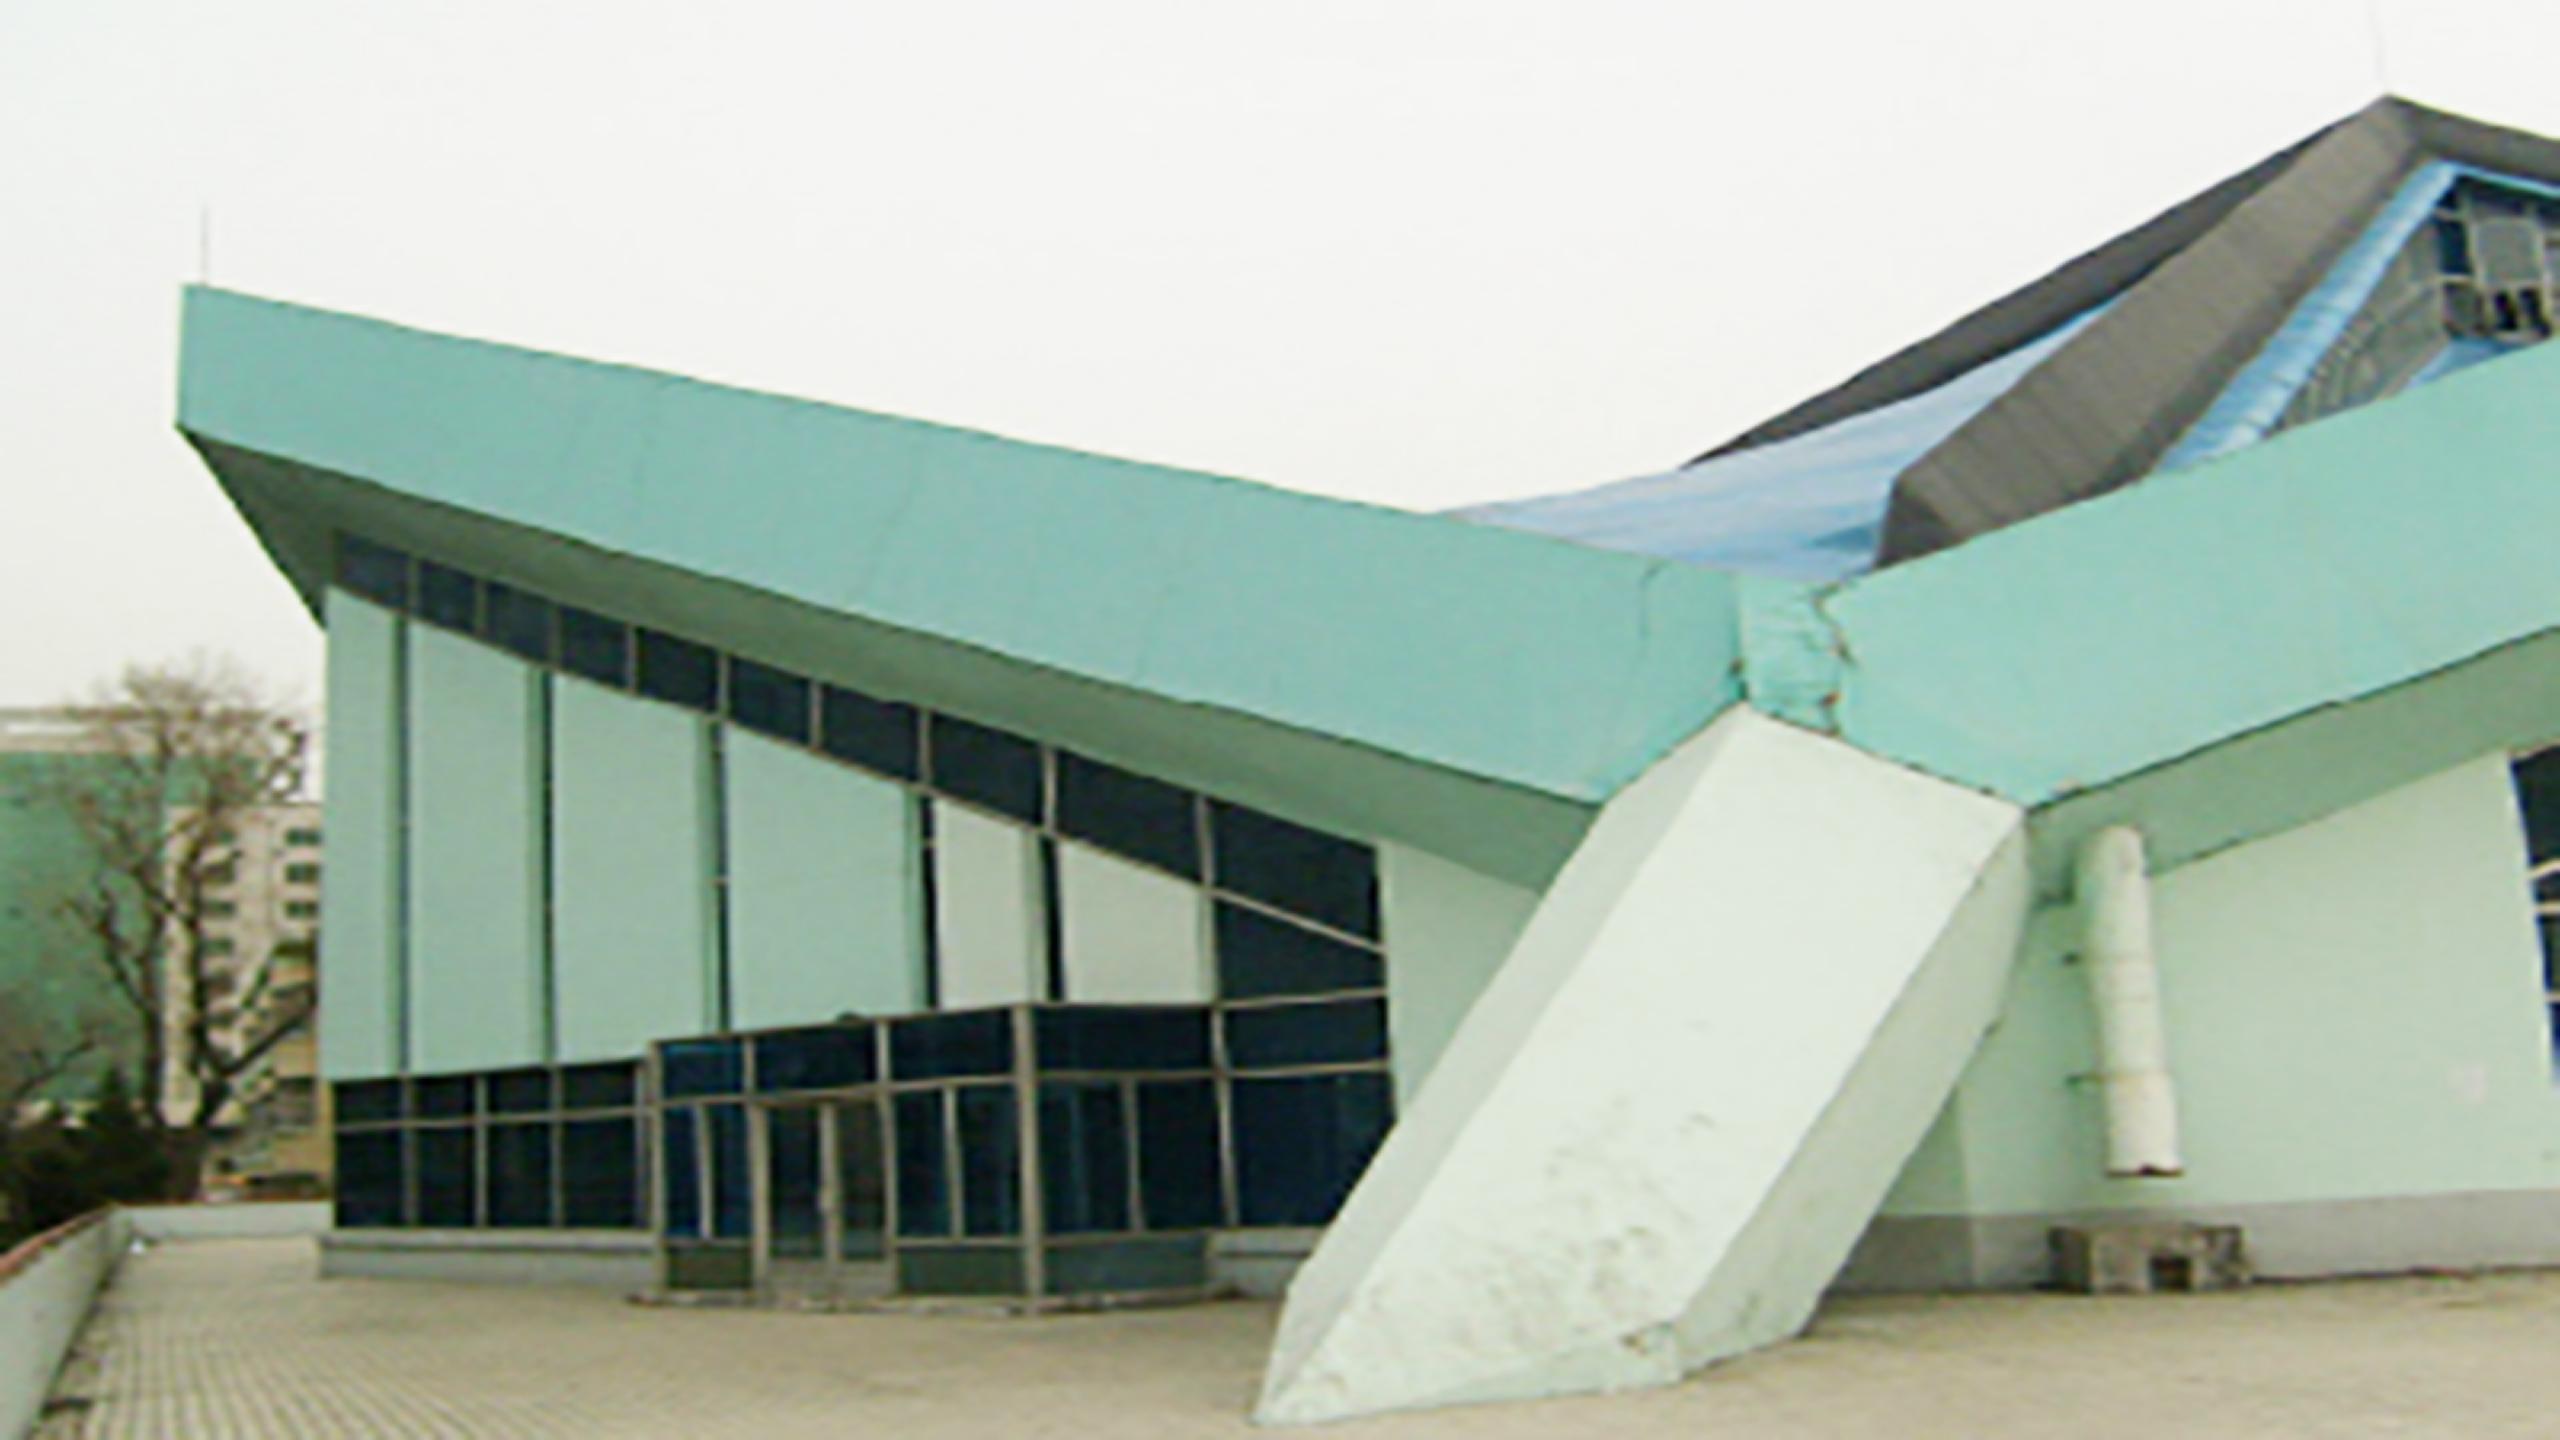 Harbin Institute of Technology Gymnasium